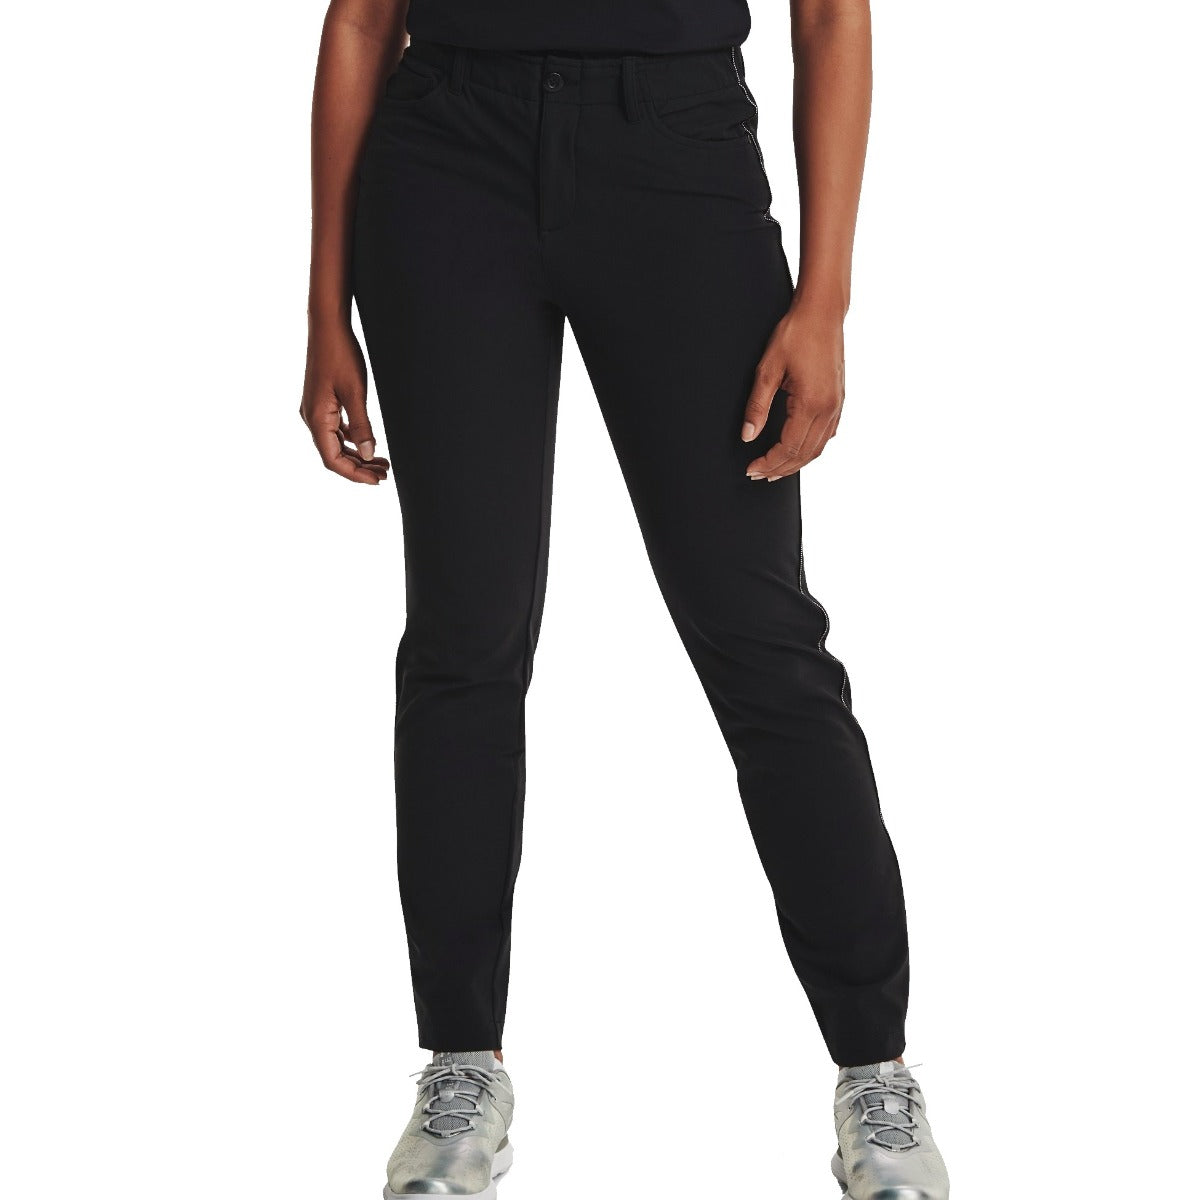 Under Armour Links Coldgear Infrared Golf Pants Ladies (Black)